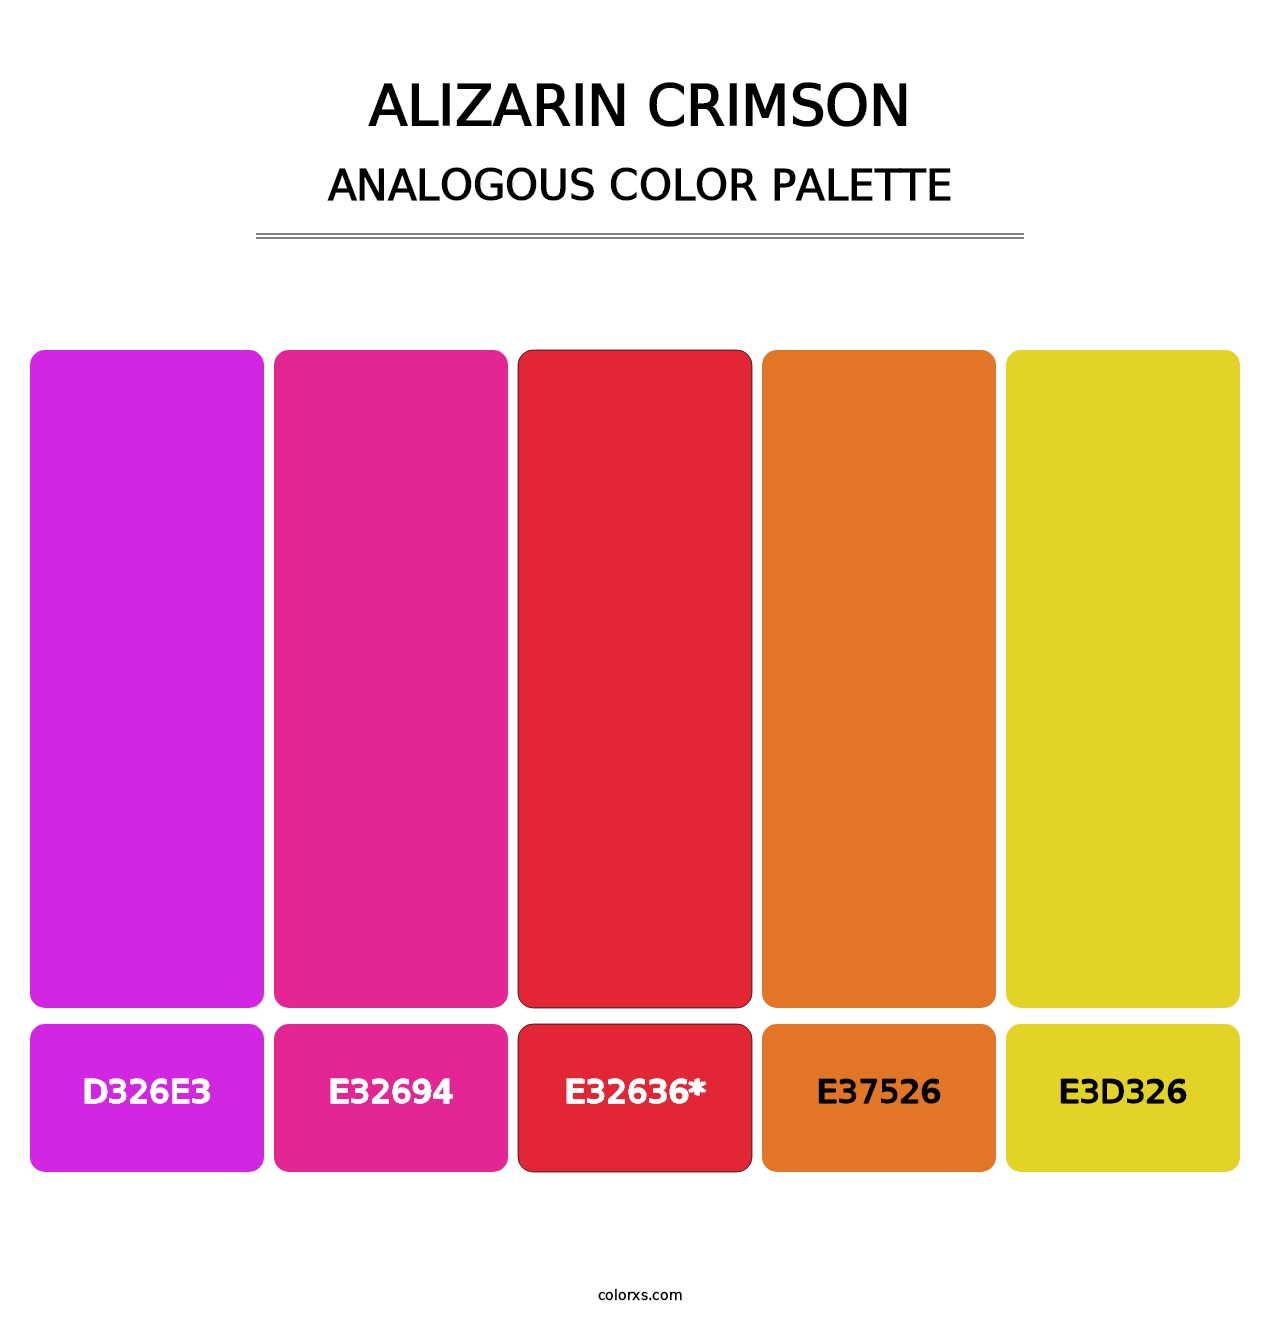 Alizarin Crimson - Analogous Color Palette